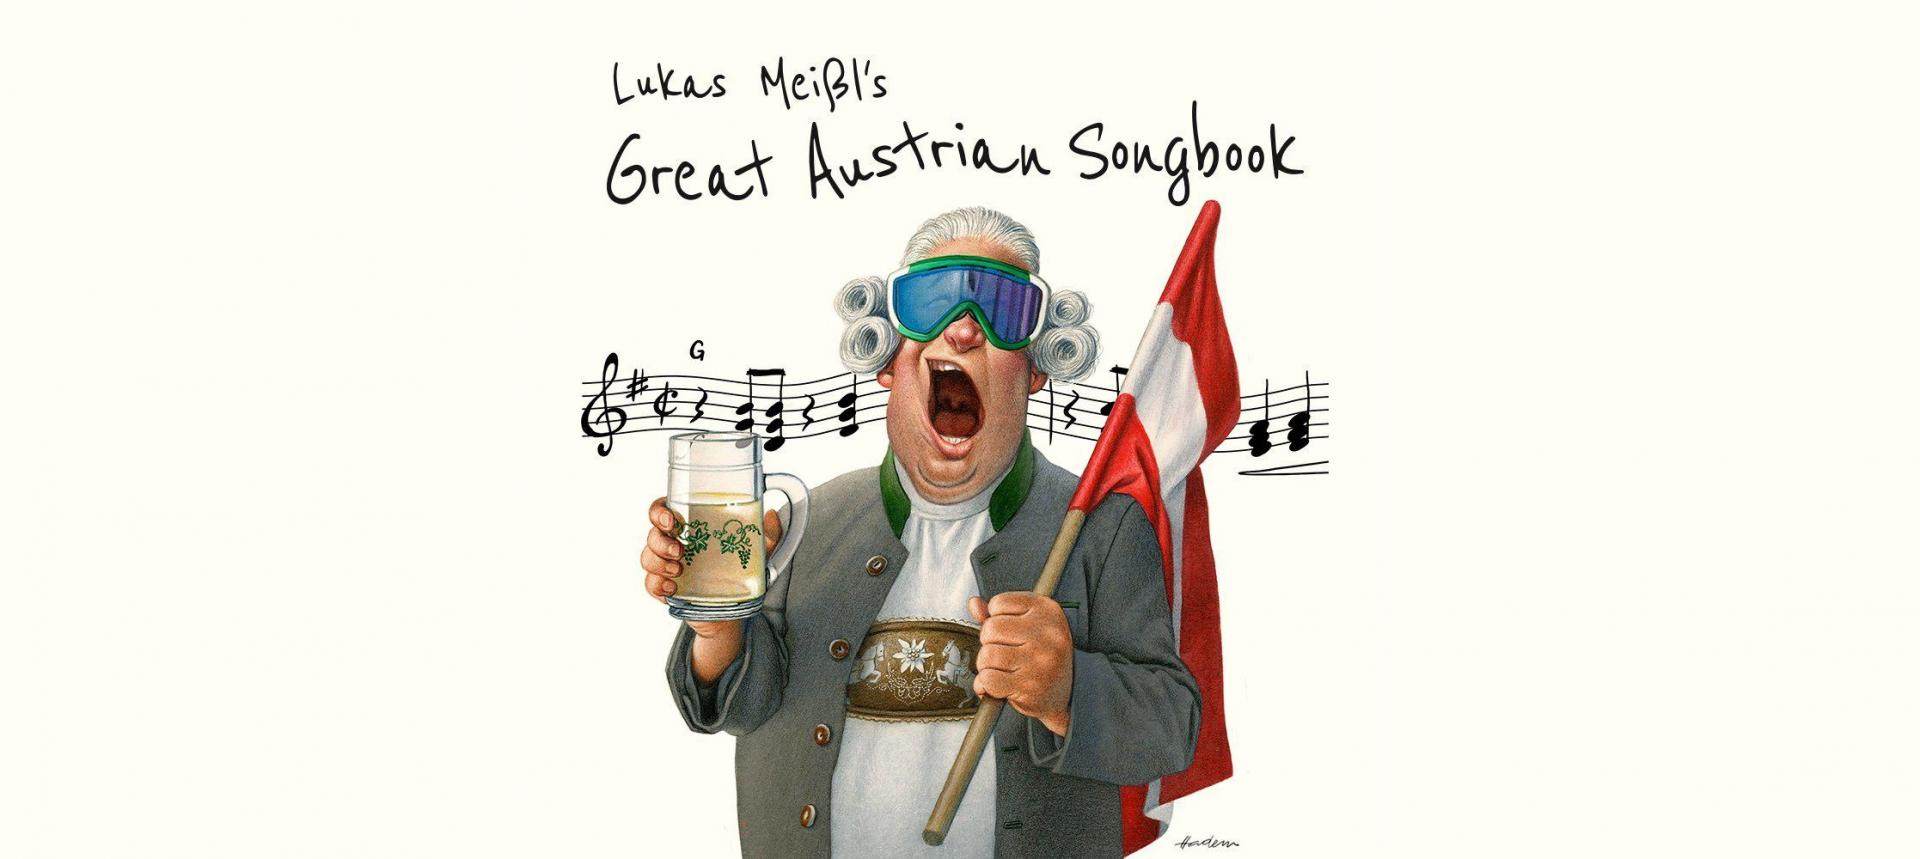 Great Austrian Songbook